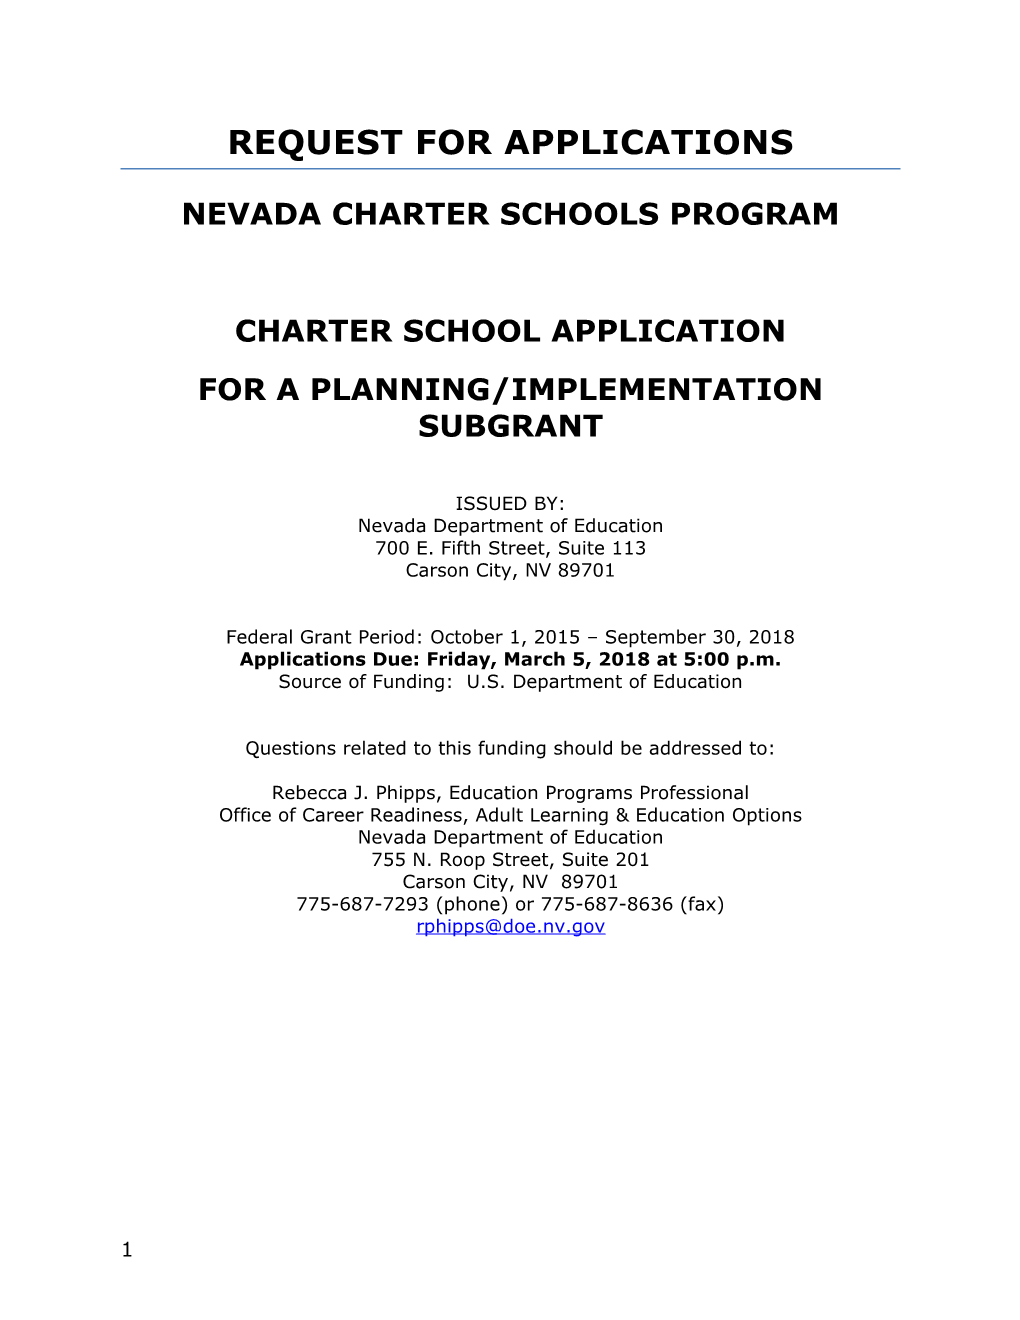 Nevada Charter Schools Program